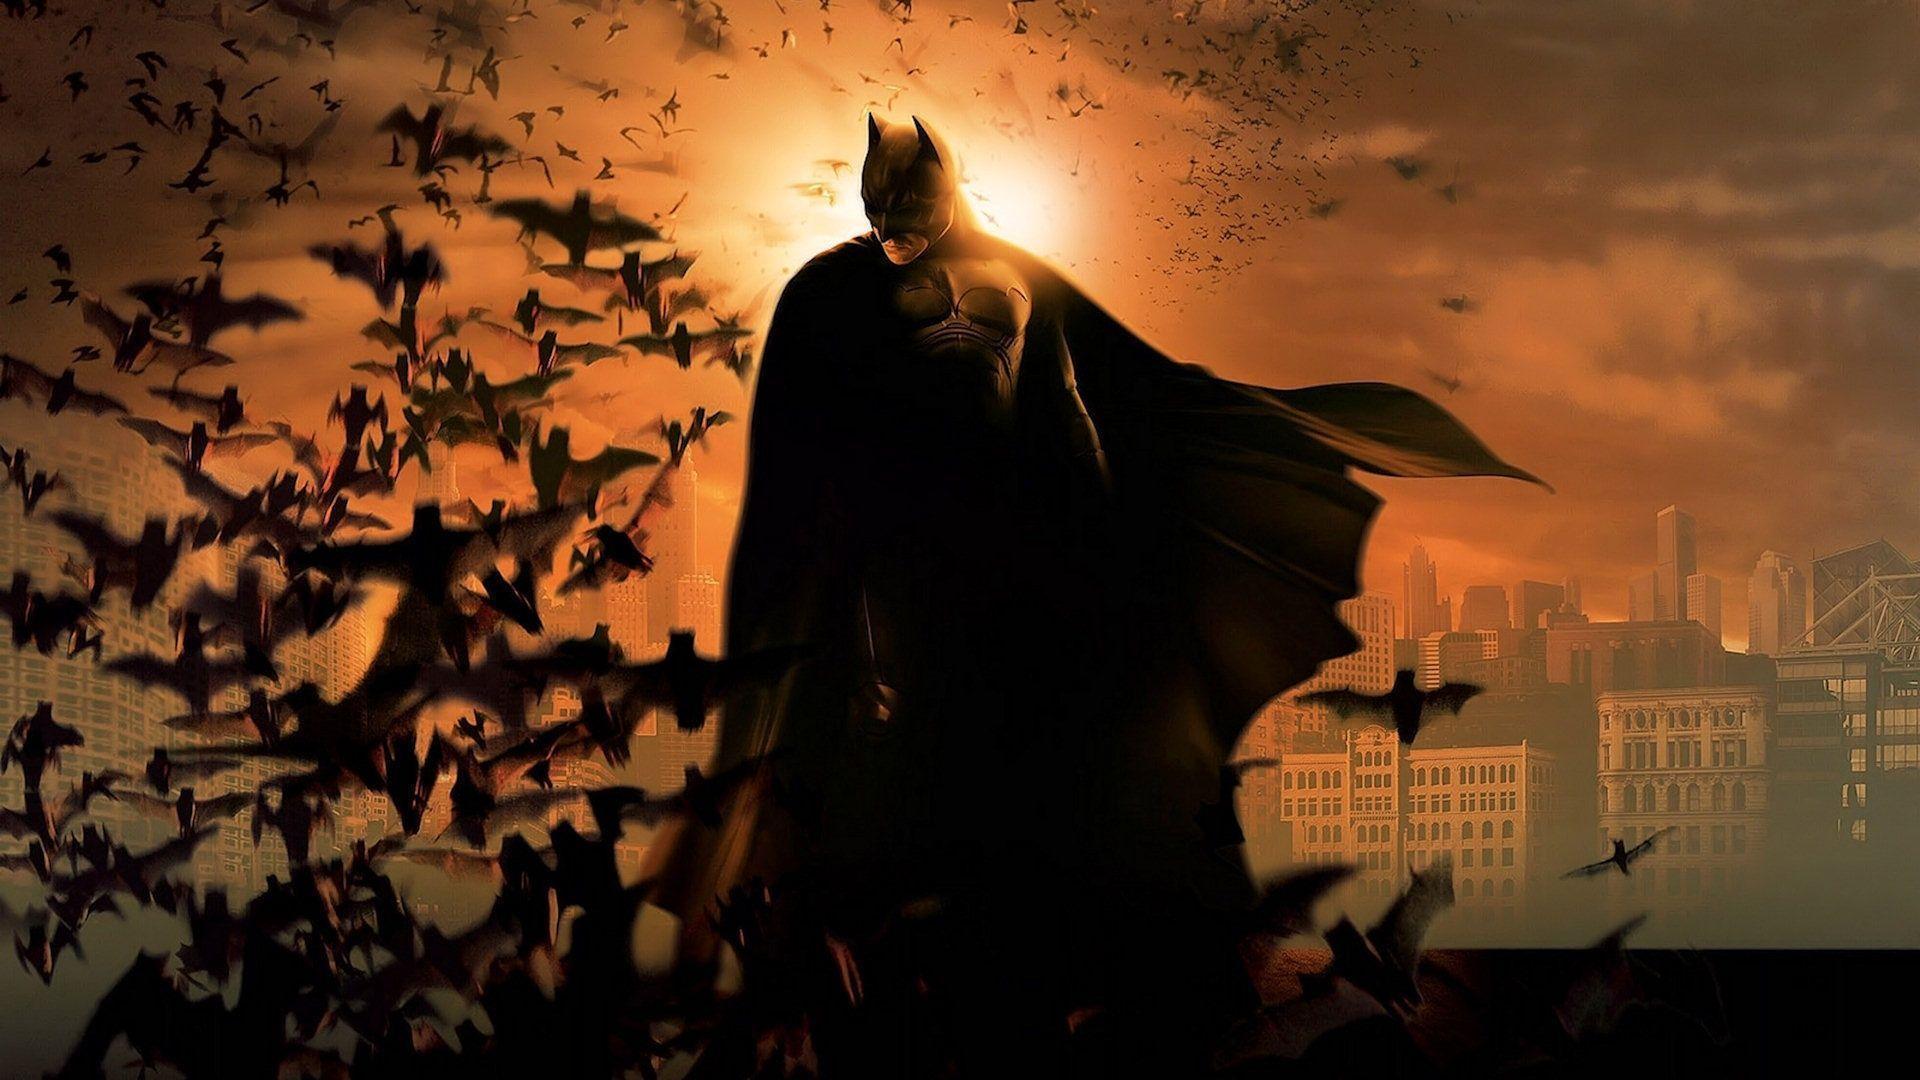 🦇 Podiї nastupnogo komiksu pro Betmena vidbuvatymuťsja u «vsesviti jak u Gri prestoliv»